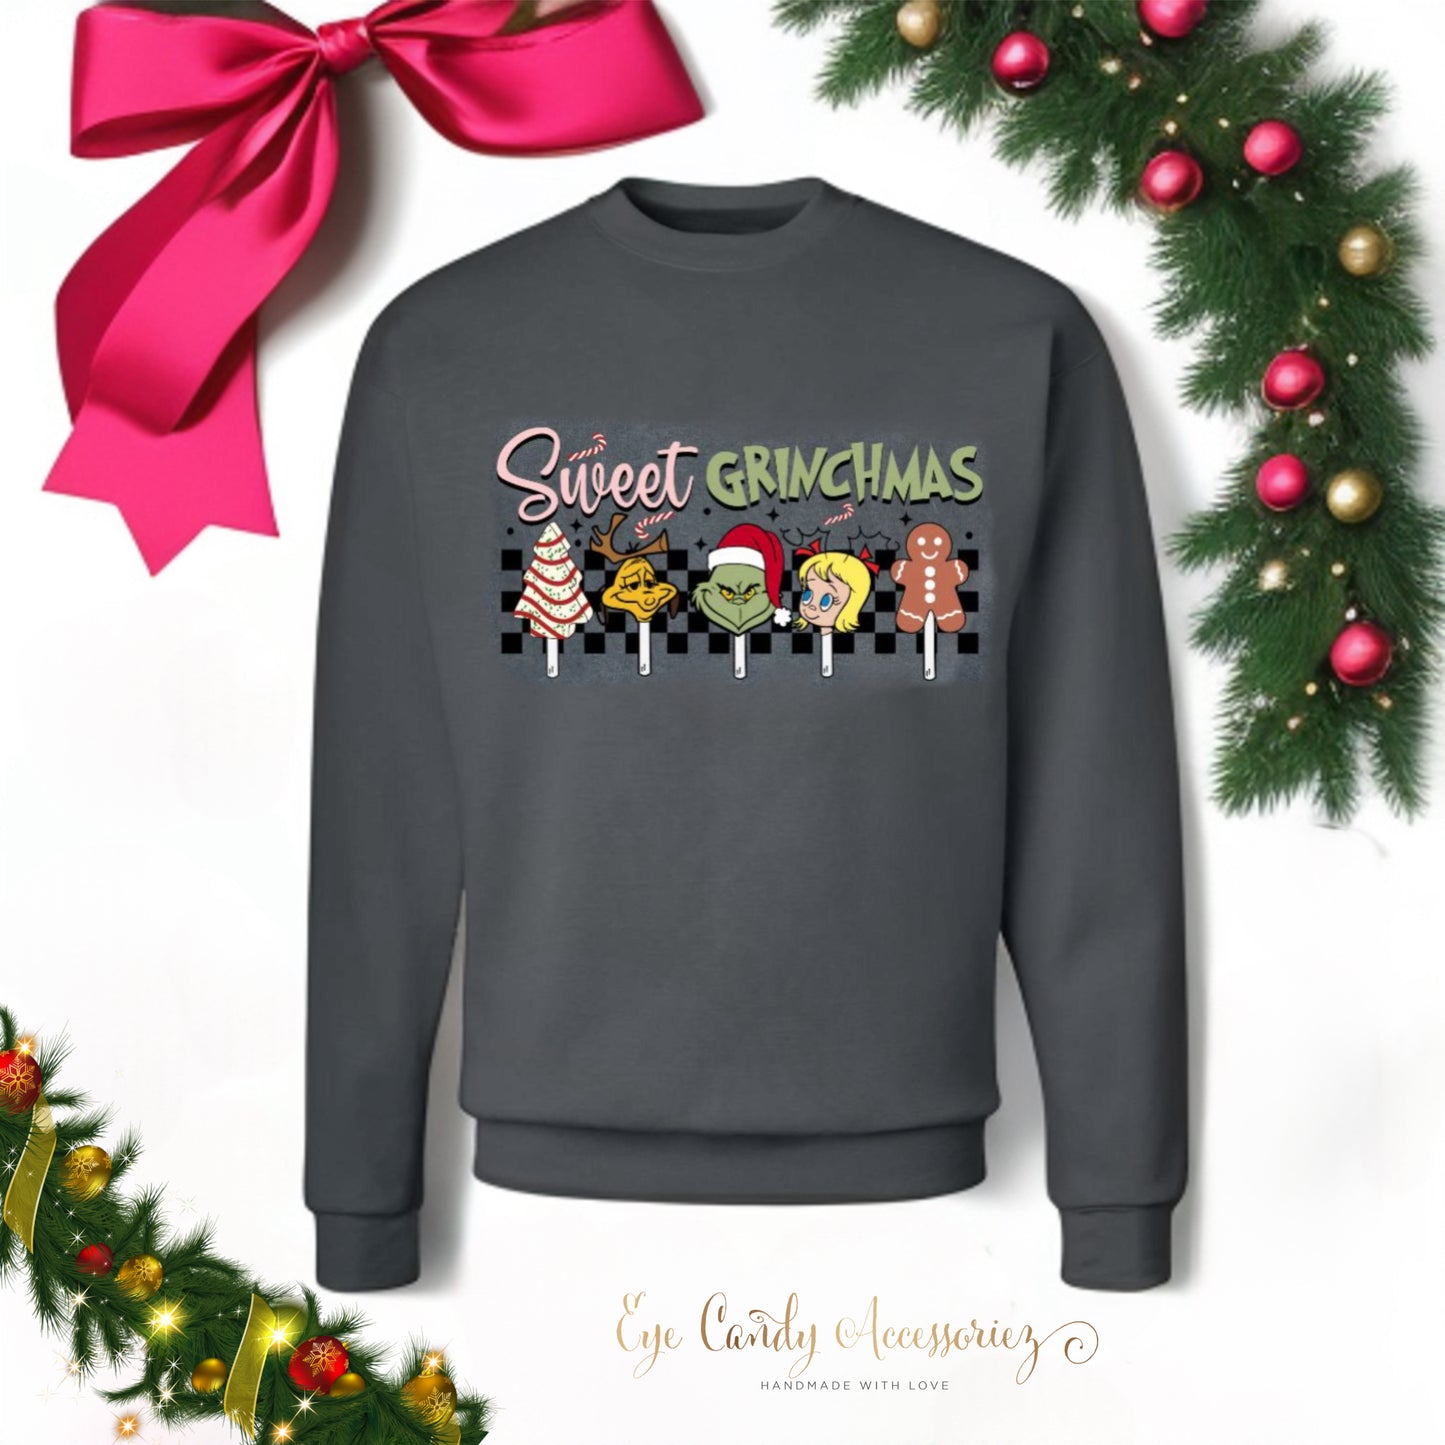 Sweet Grnchmas - Adult & Kids Unisex Sweater/T-Shirt/Hoodie